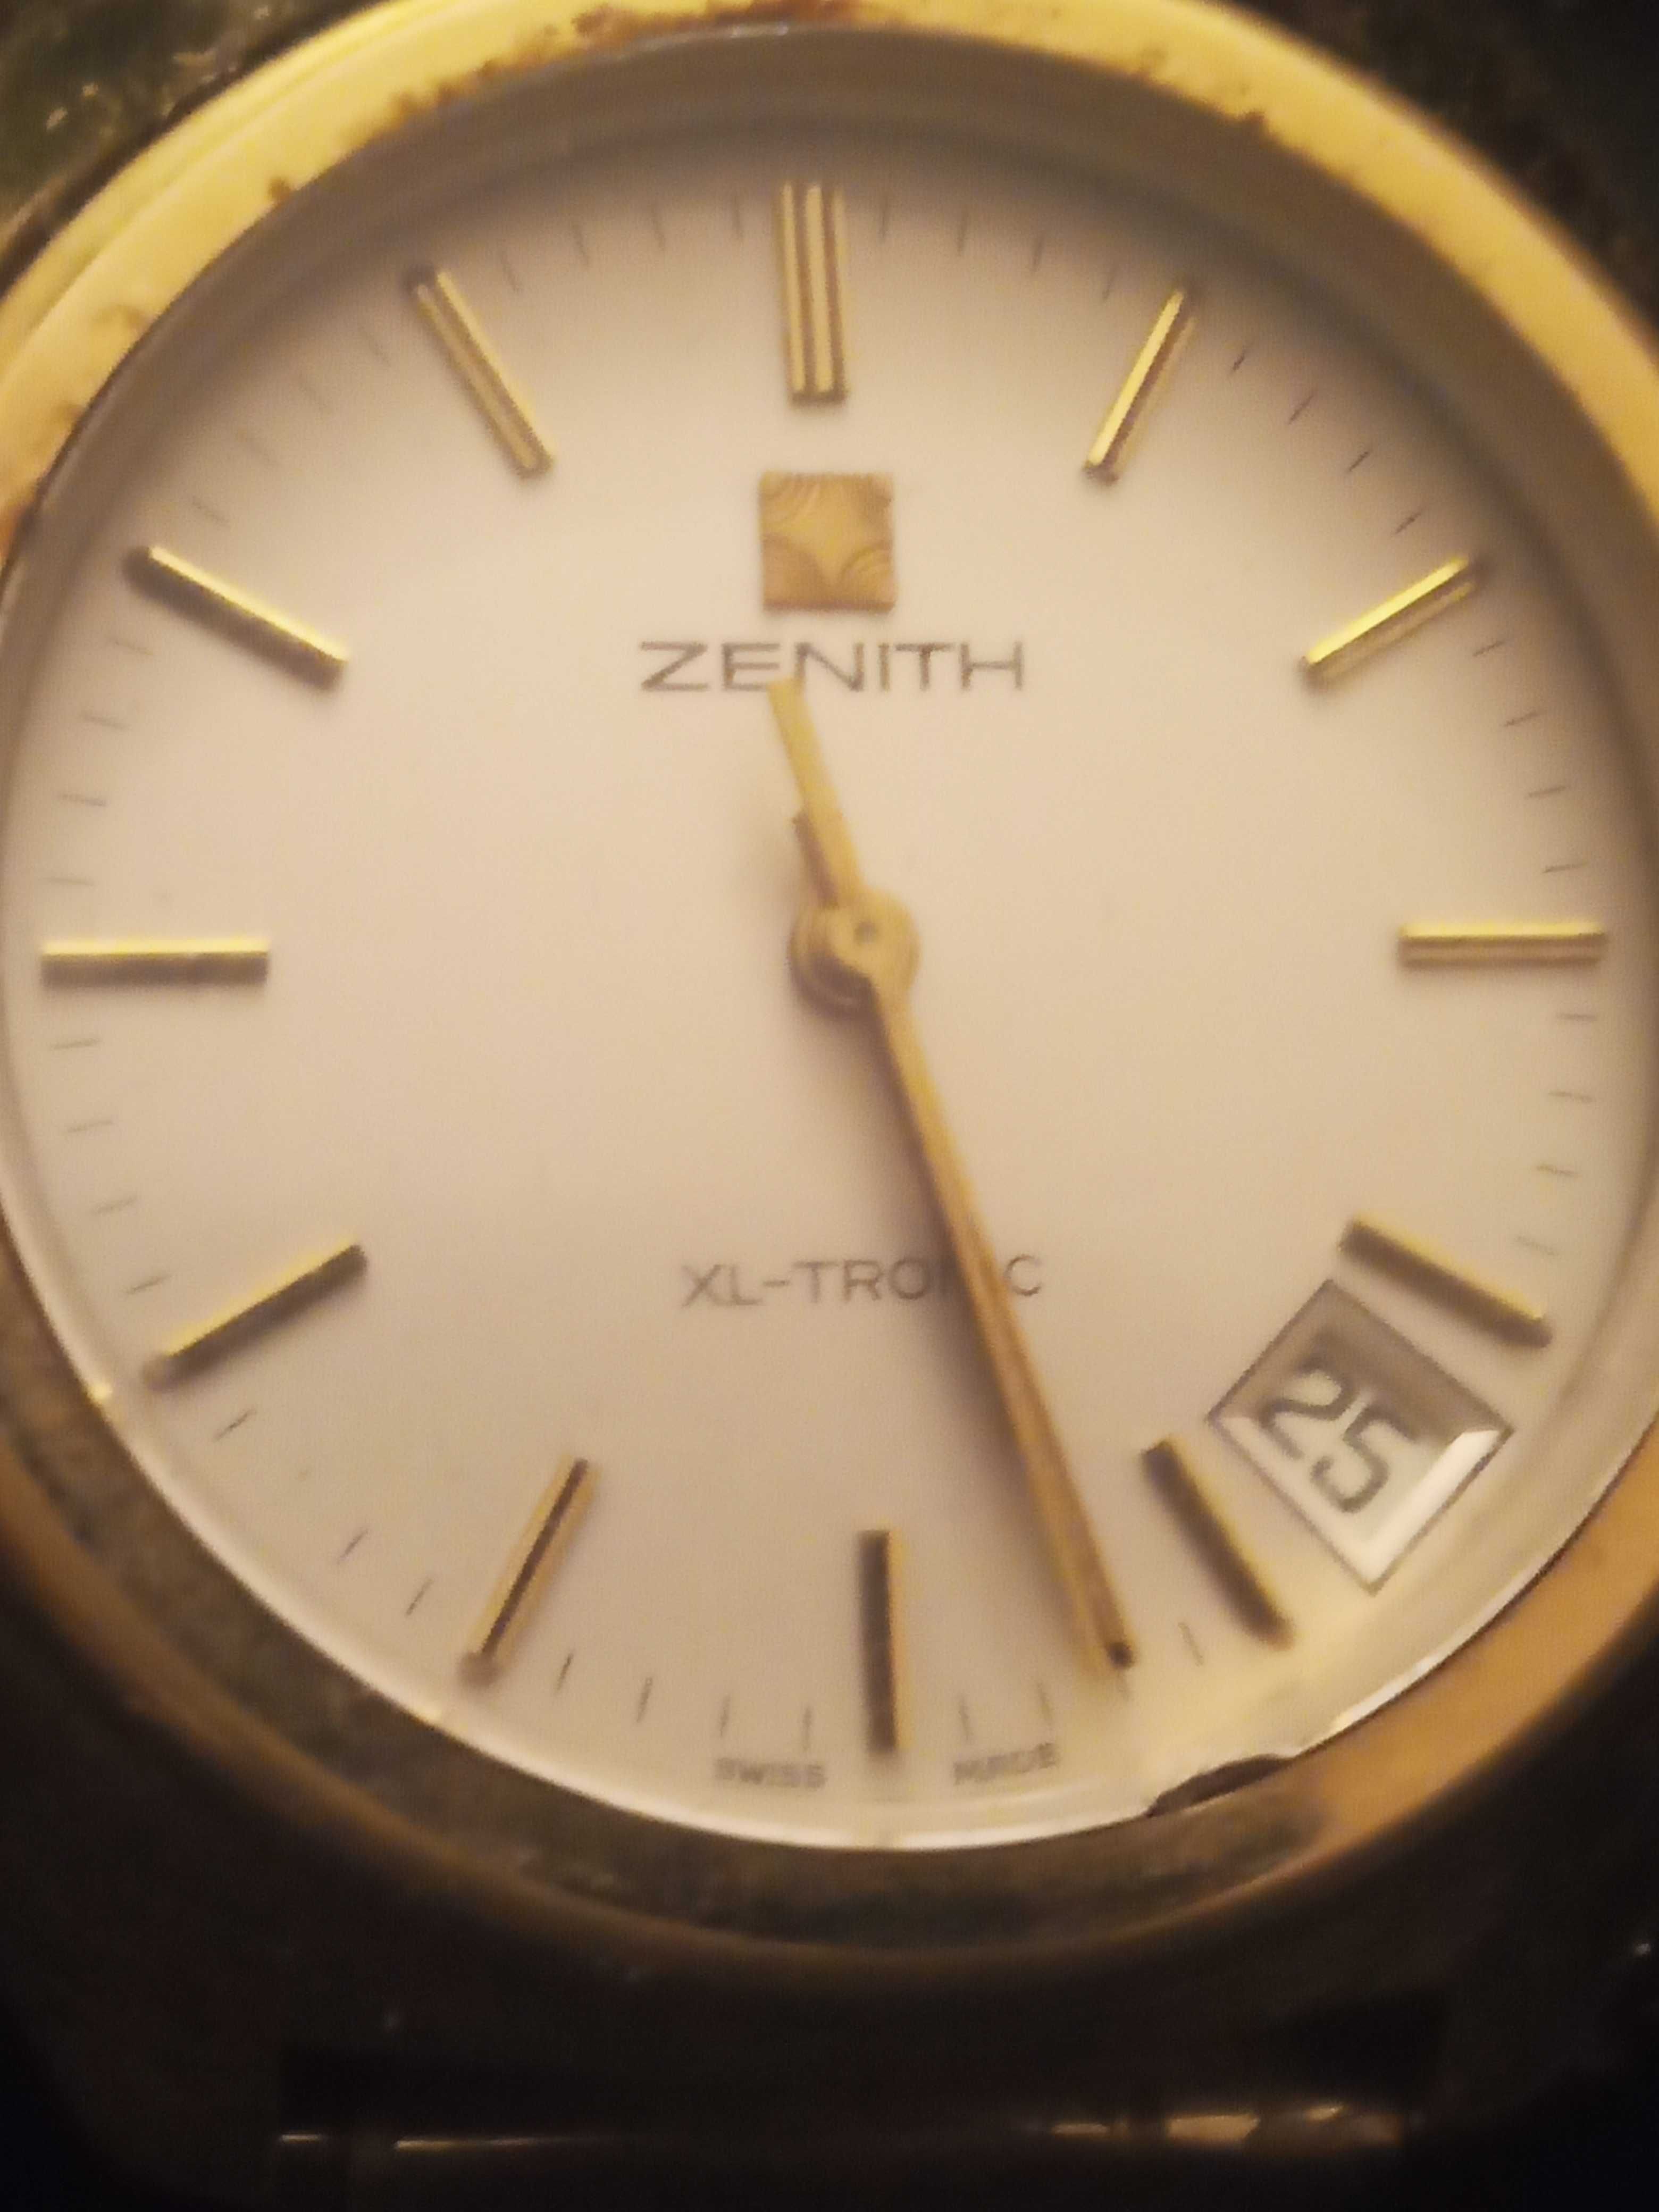 Zegarek zenith xtronic